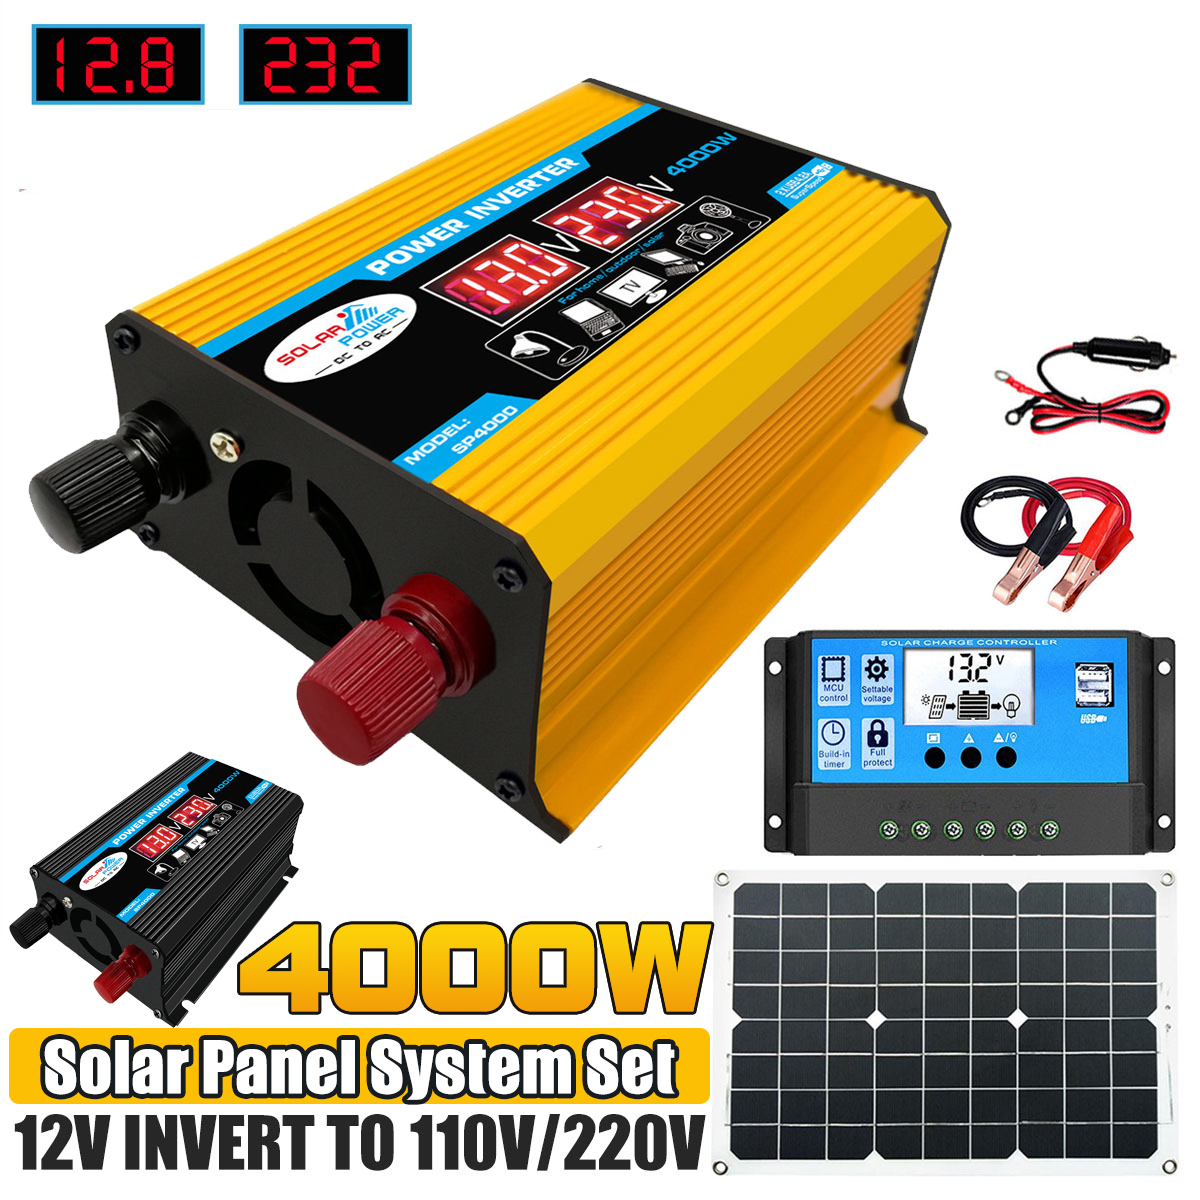 Solar-Power-Generation-System-18W-Solar-Panel--4000W-Dual-USB-LCD-Power-Inverter-12V-to-220V110V-30A-1868743-2